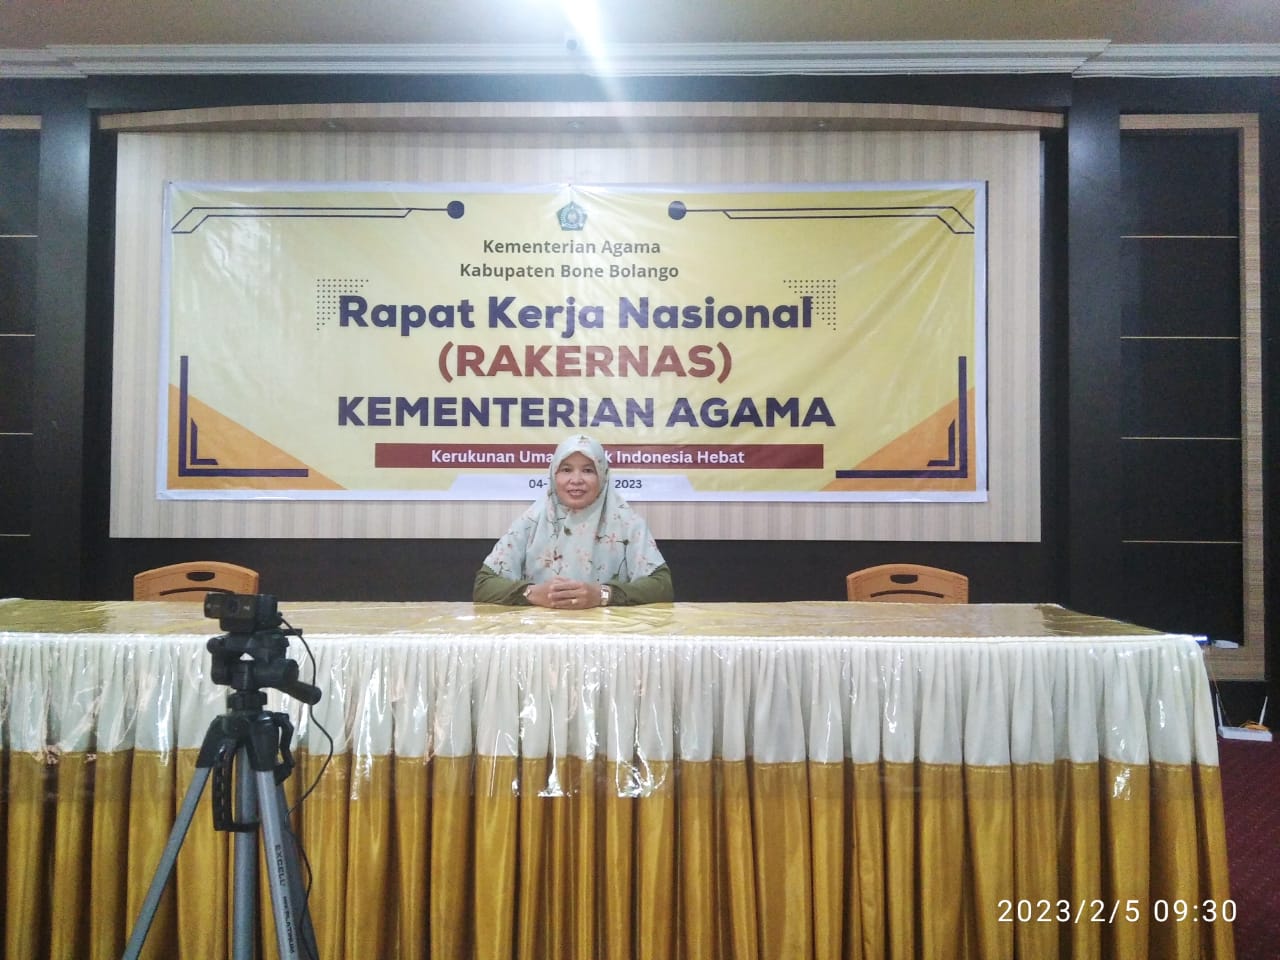 Kepala MAN ICG Hadiri Rakernas Kemenag Republik Indonesia Melalui Virtual Meeting